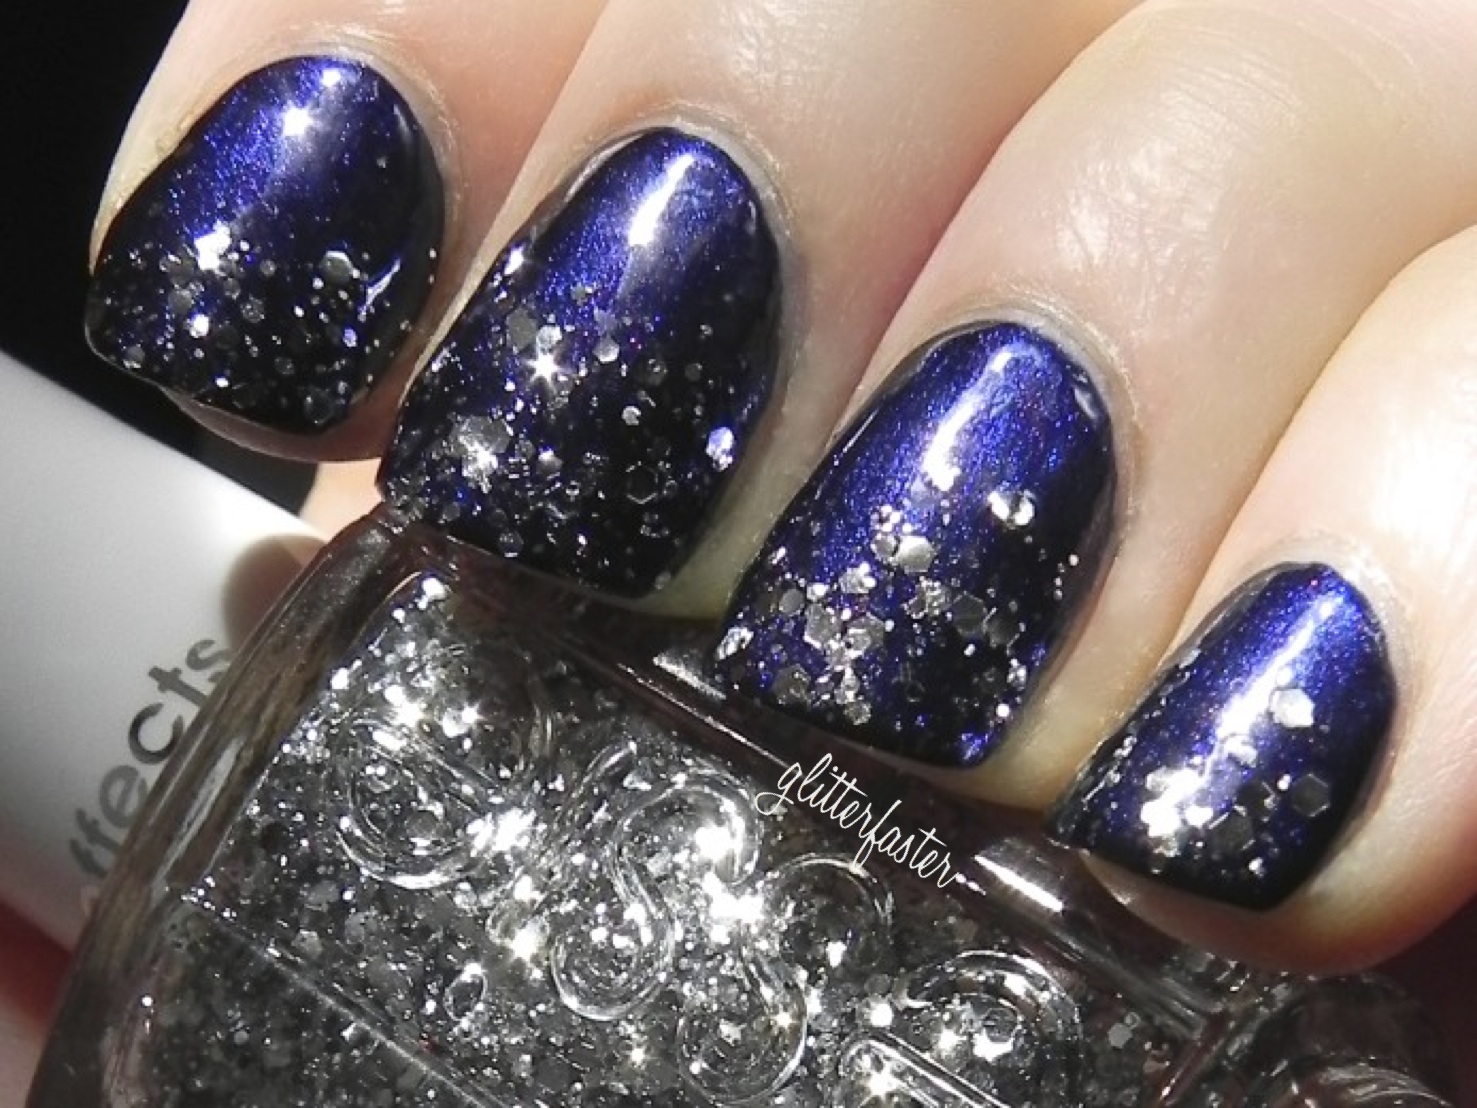 Regal - Illamasqua - royal blue | Nail polish, Nails, Polish